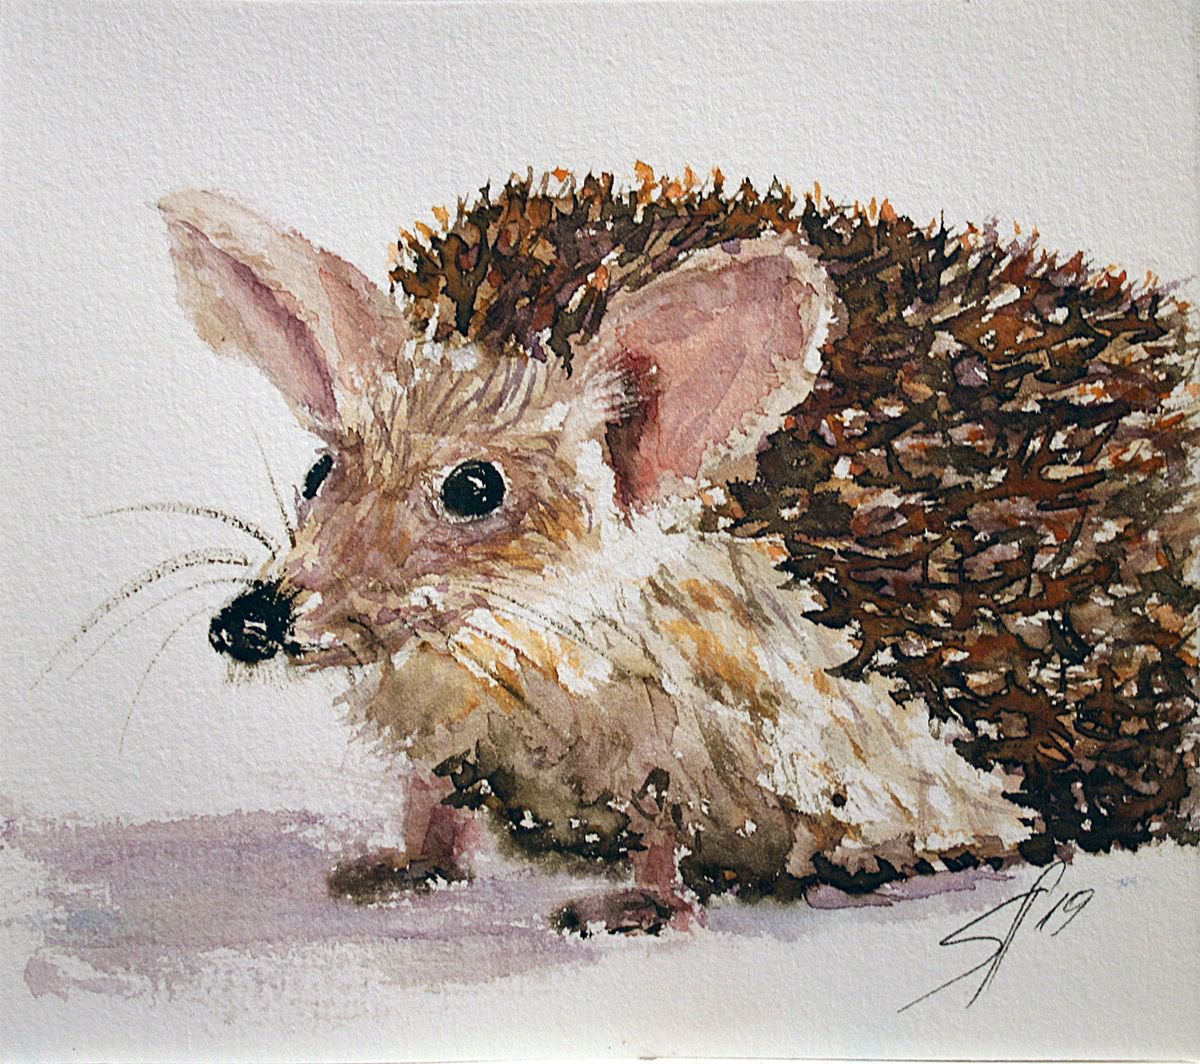 Hedgehog eared (Hemiechinus auritus) by Salana Art Gallery